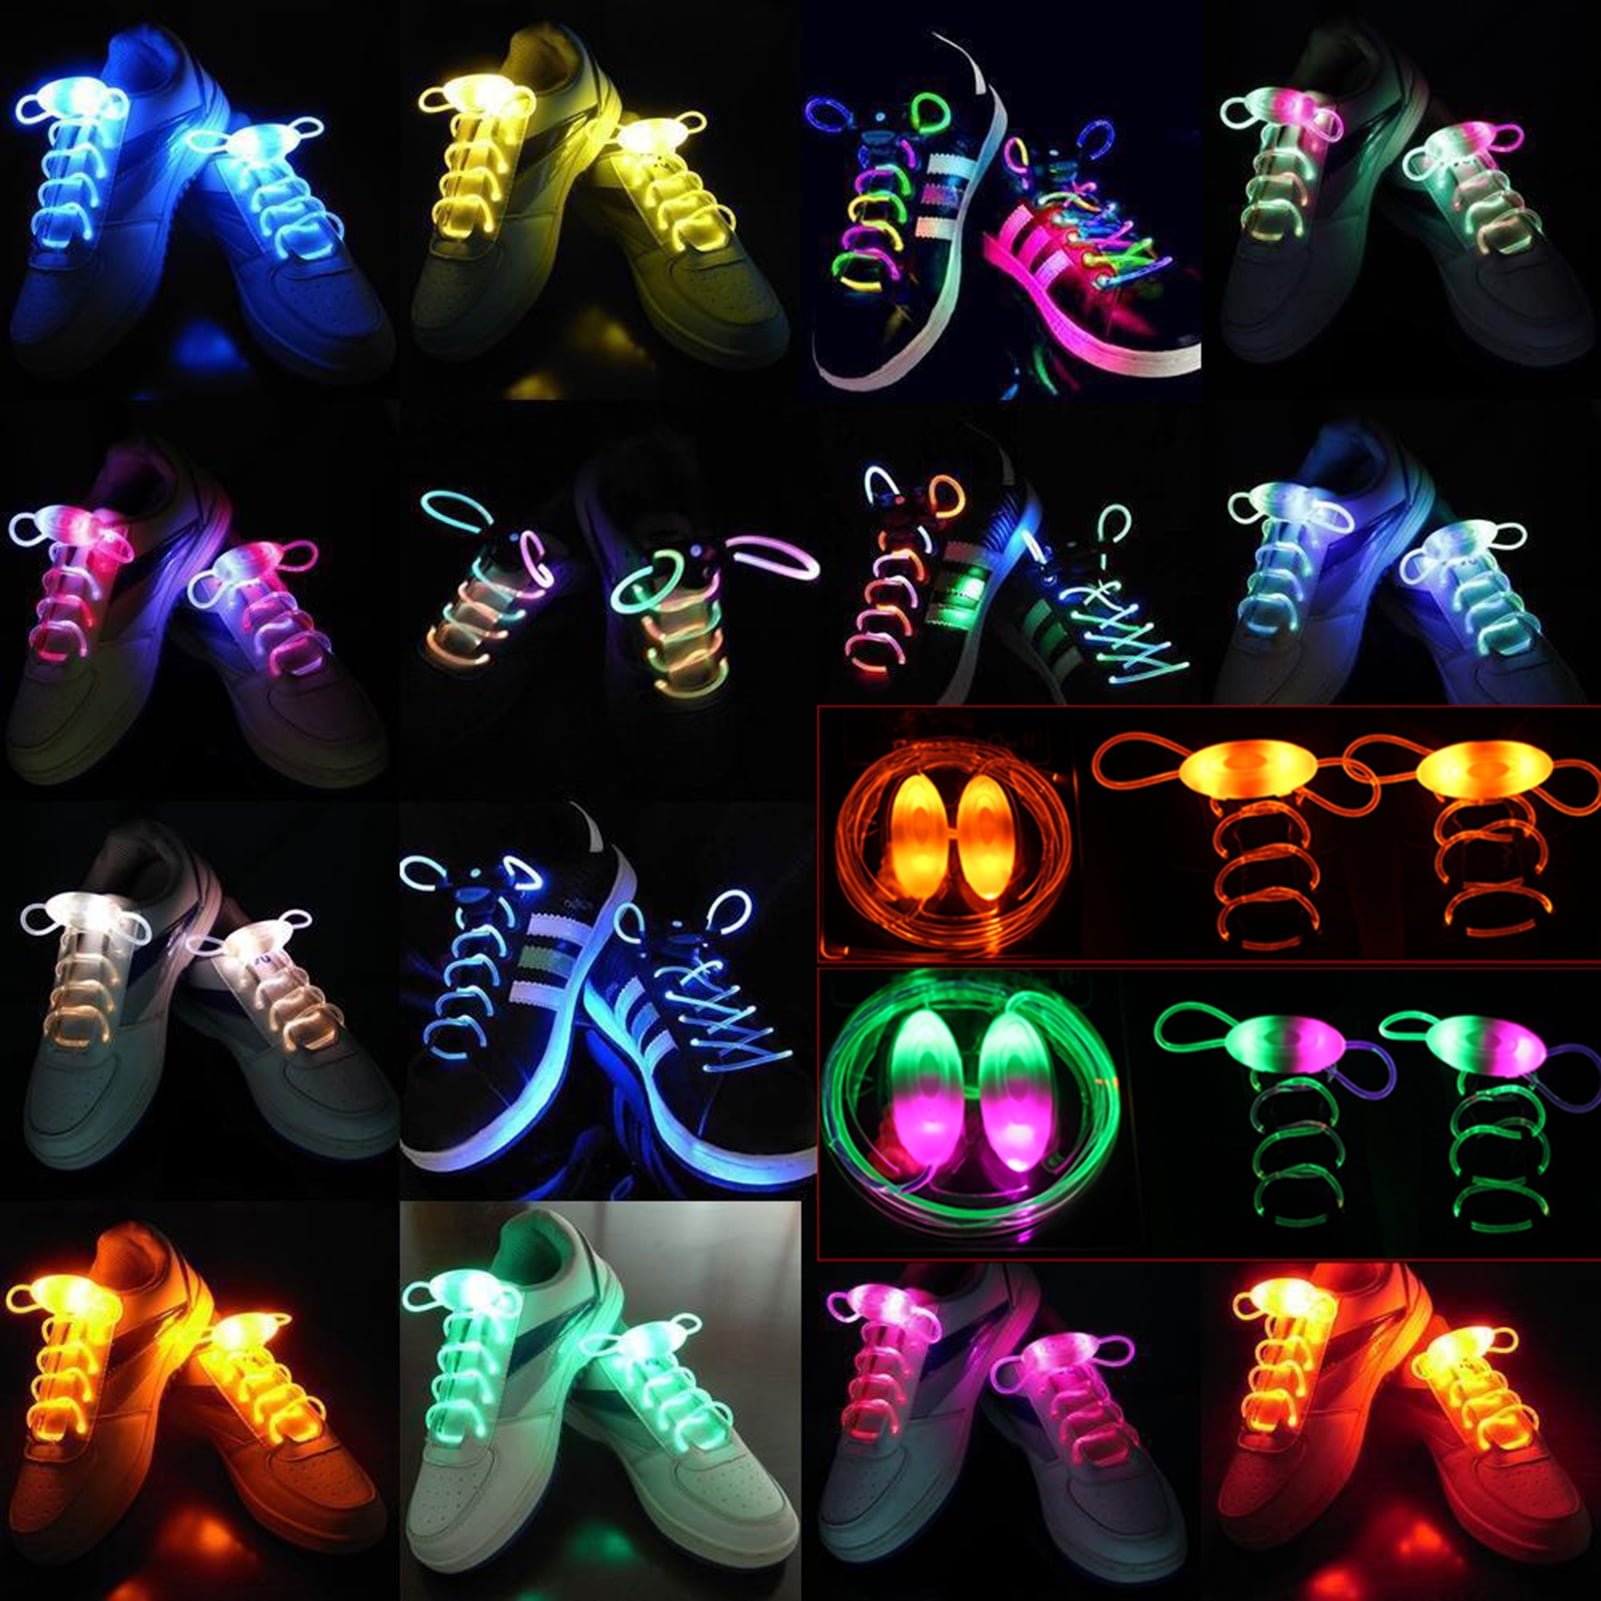 LED Shoe Laces Flash Light Up Colors Glow Flashing Shoelaces Party Cool Decor US